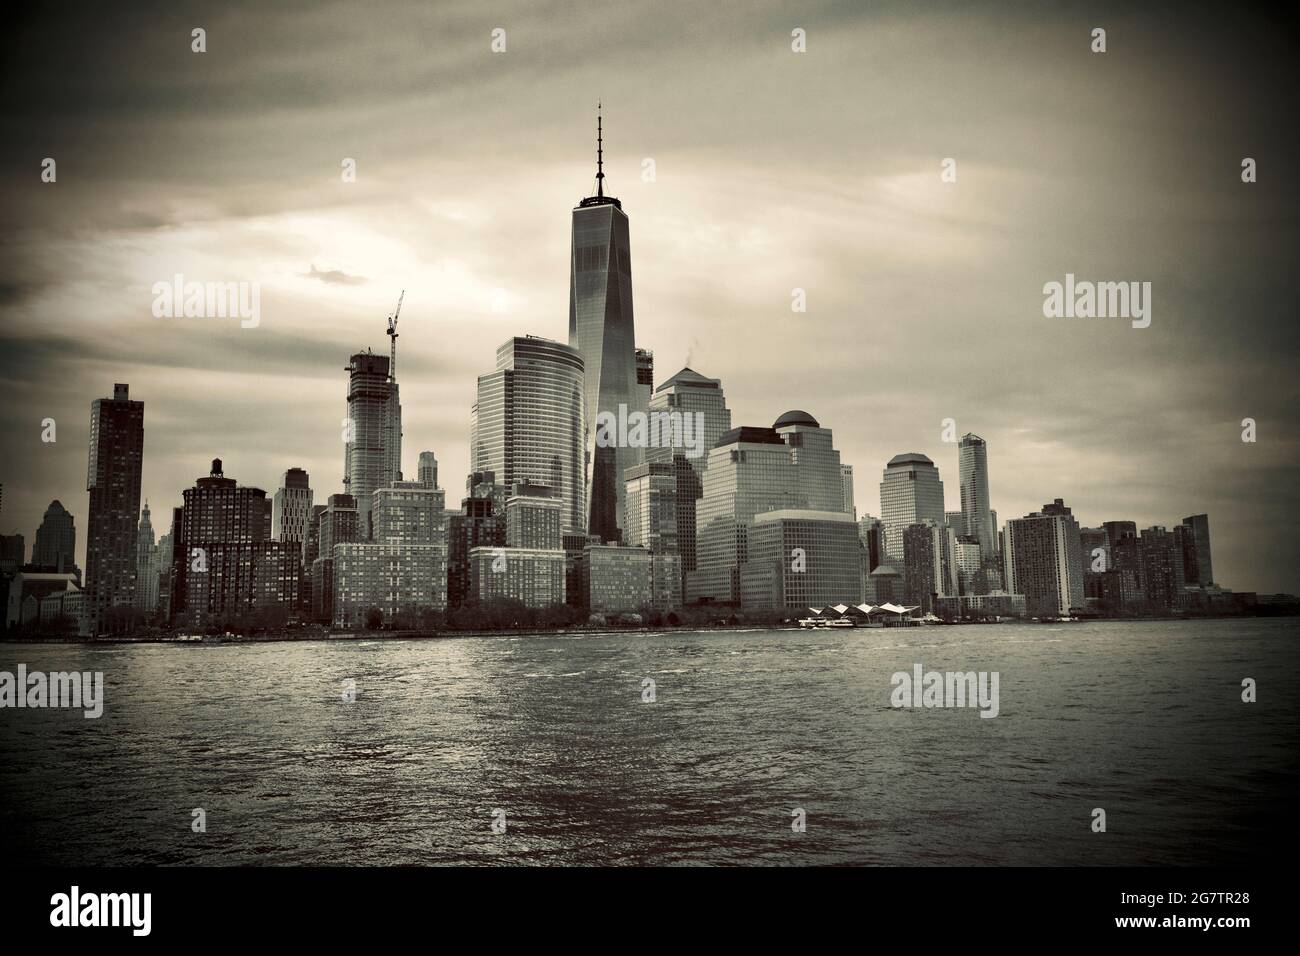 Il World Trade Center a Manhattan, New York, dal traghetto New York Waterway sul fiume Hudson. Foto Stock